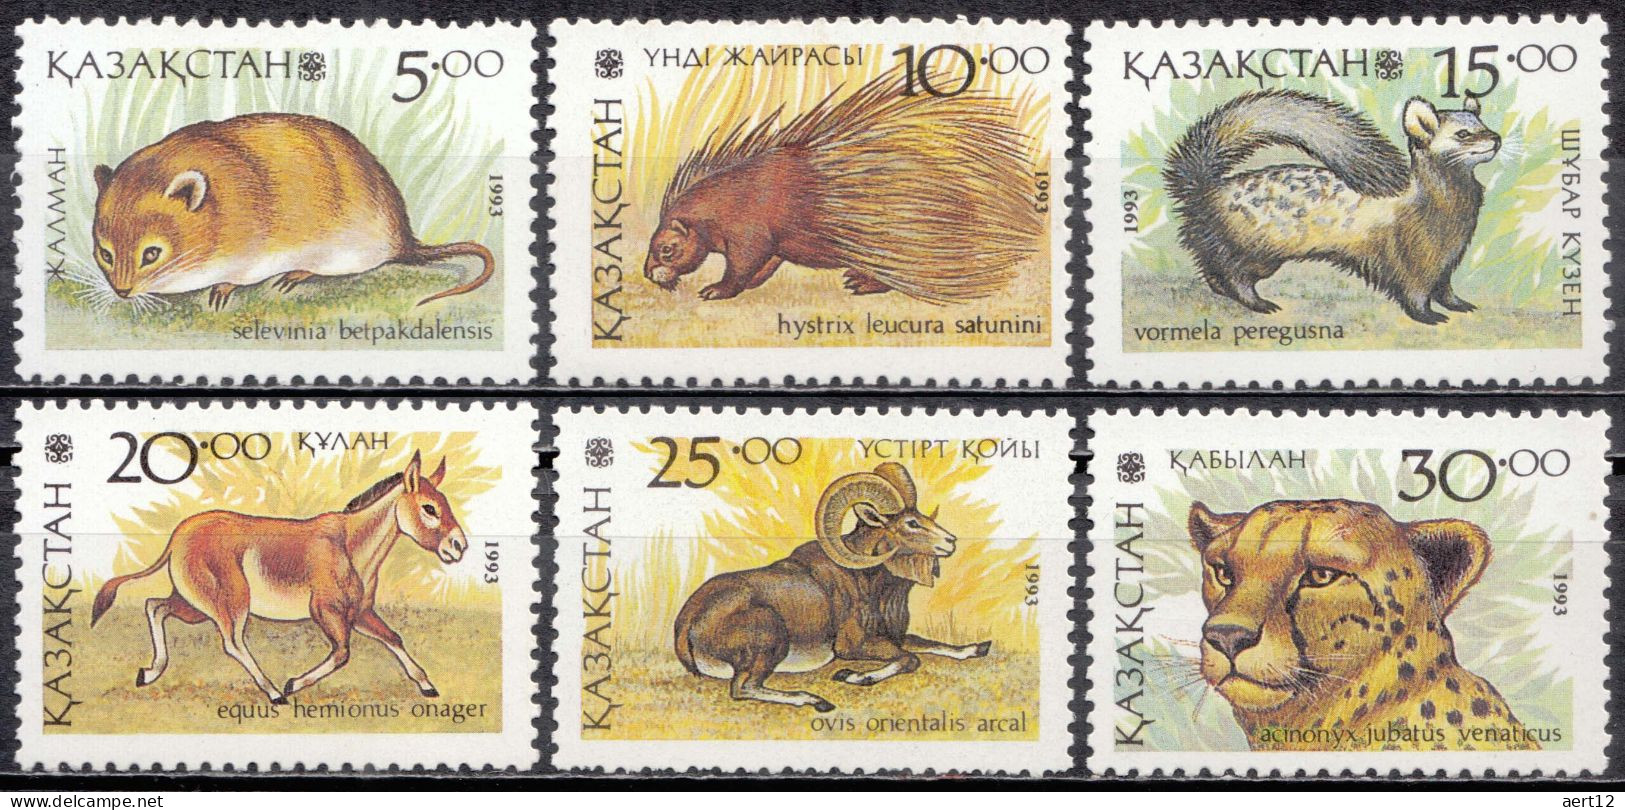 1993, Kazakhstan, Fauna, Cheetahs, Donkeys, Dormice, Porcupines, Rodents, Sheep, 6 Stamps, MNH(**), KZ 31-36 - Kasachstan